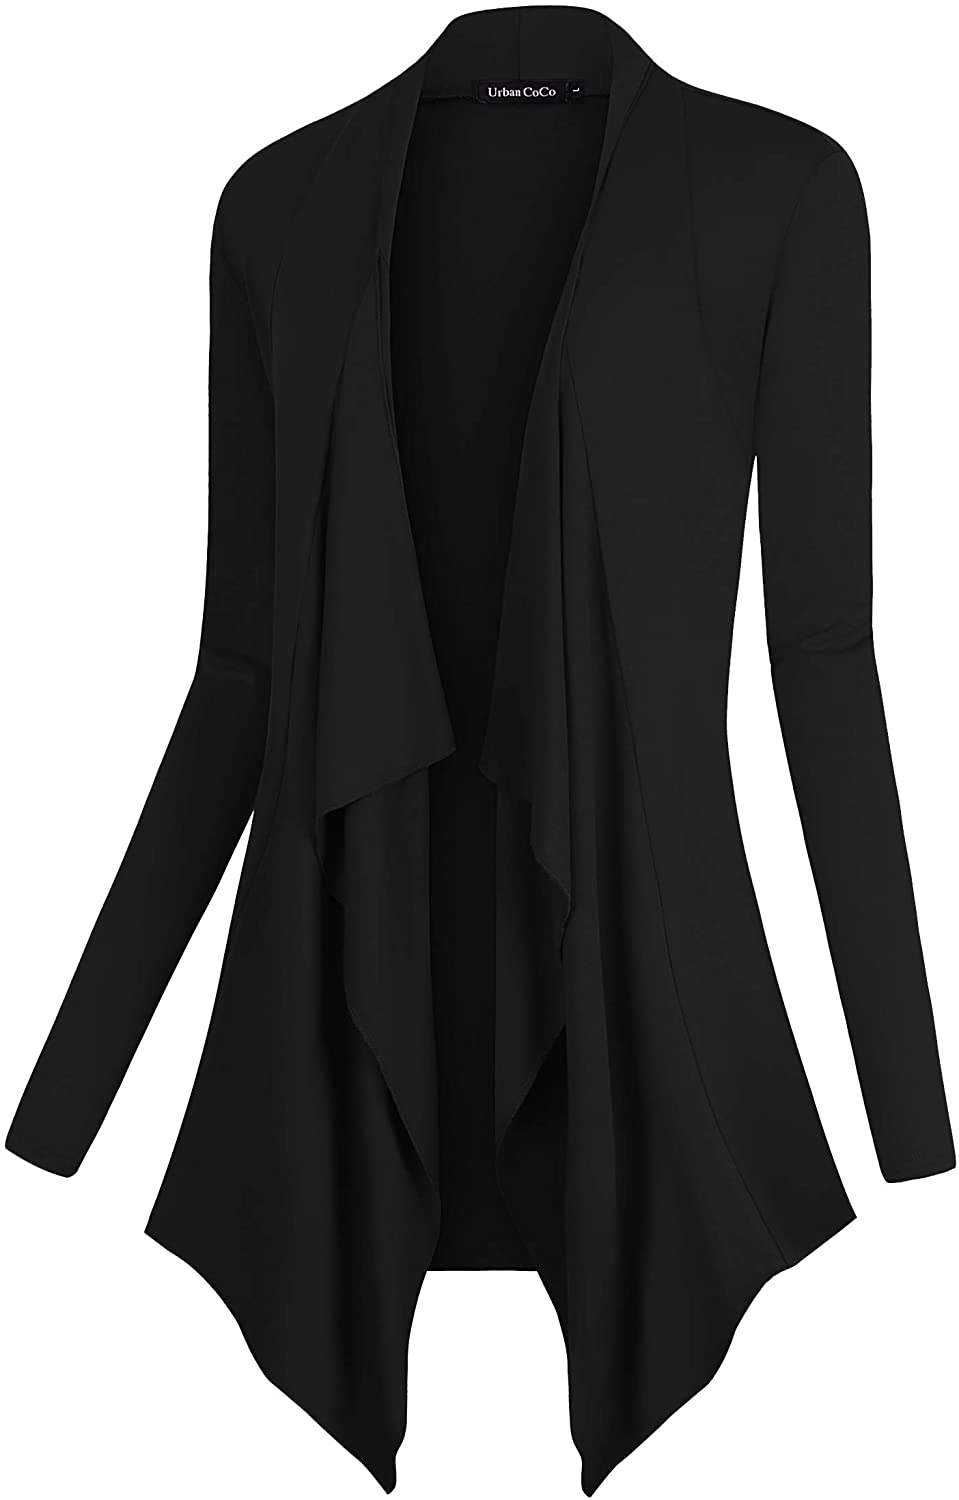 Urban CoCo Women's Drape Front Open Cardigan Long Sleeve, Black, Size ...